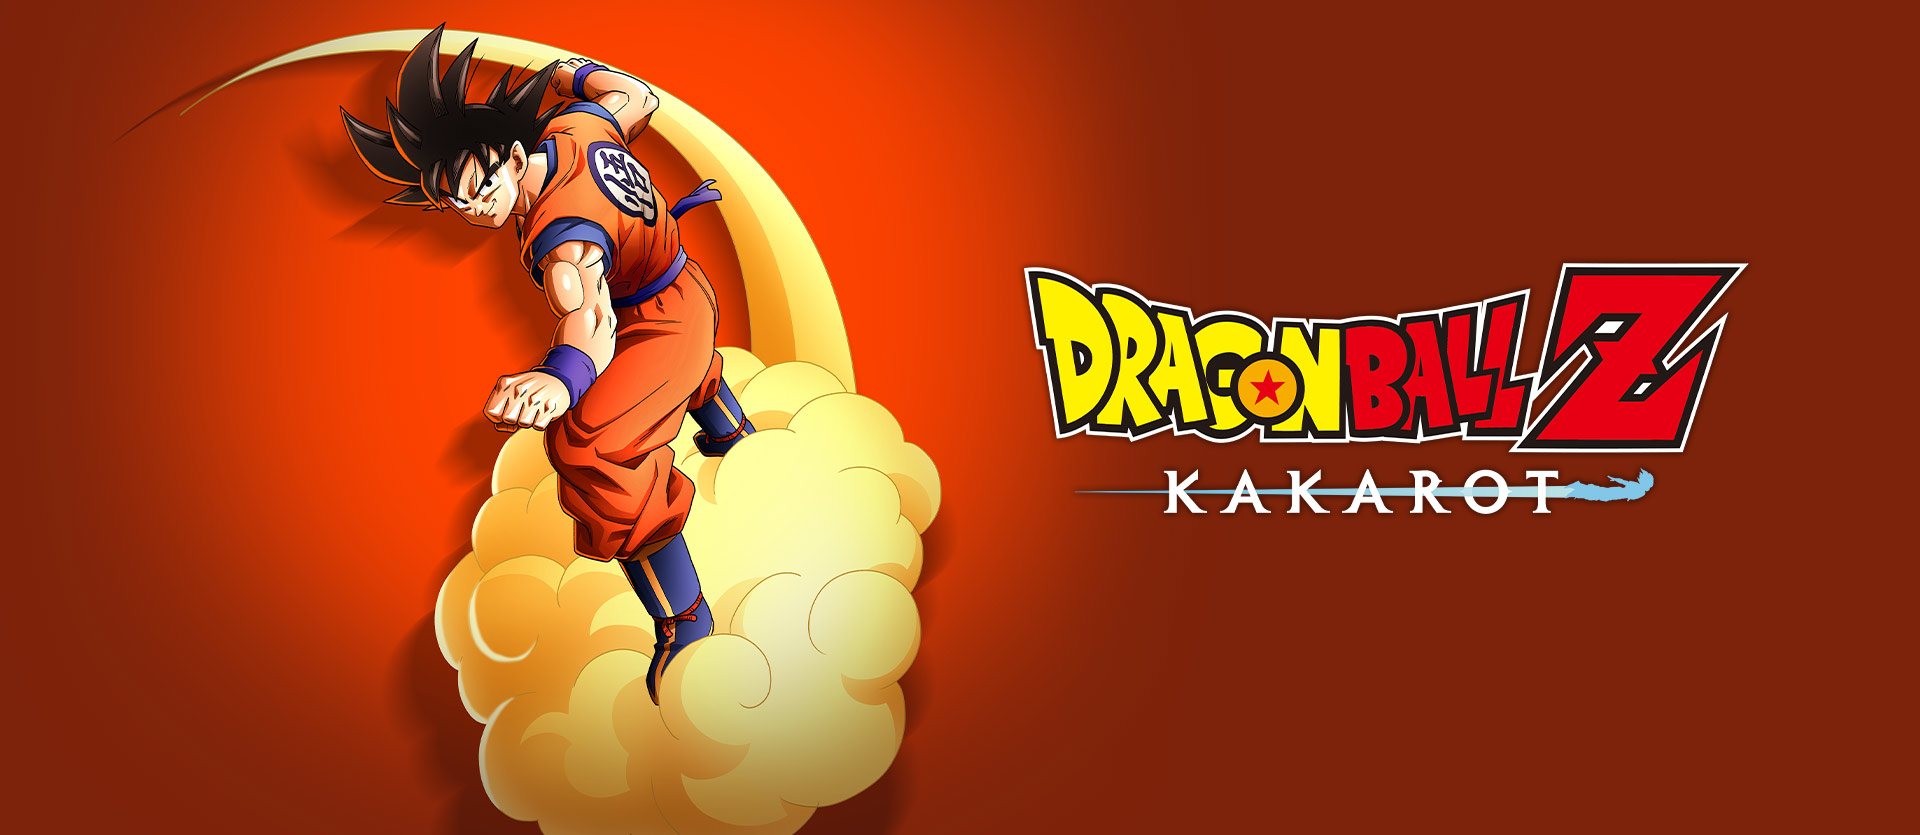 Dragon Ball Z: Kakarot - Análisis - The Couch